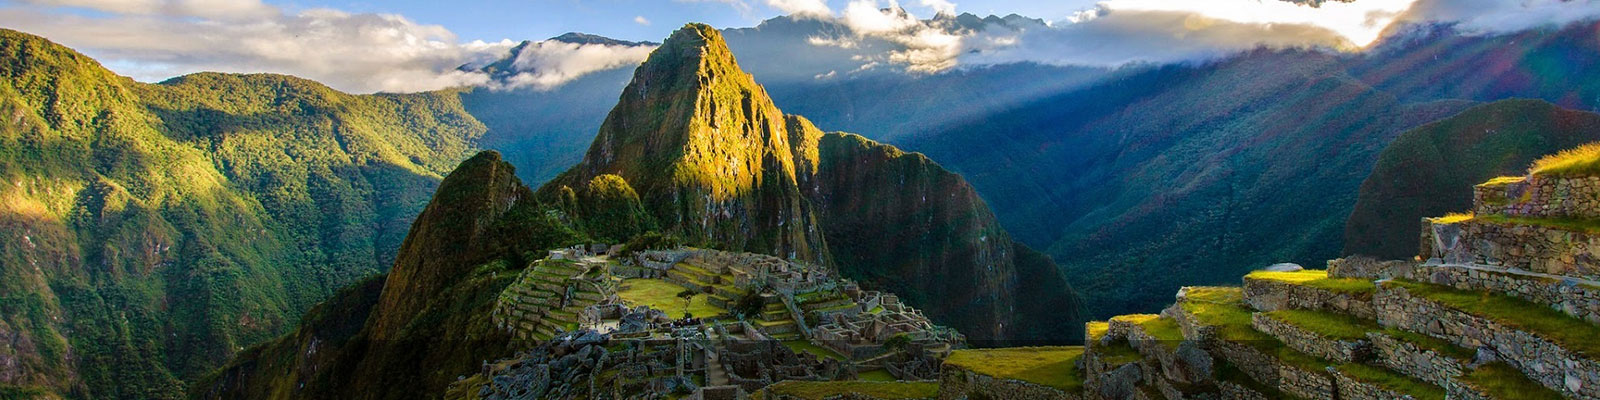 Vista panorámica de la ciudadela de Machu Picchu